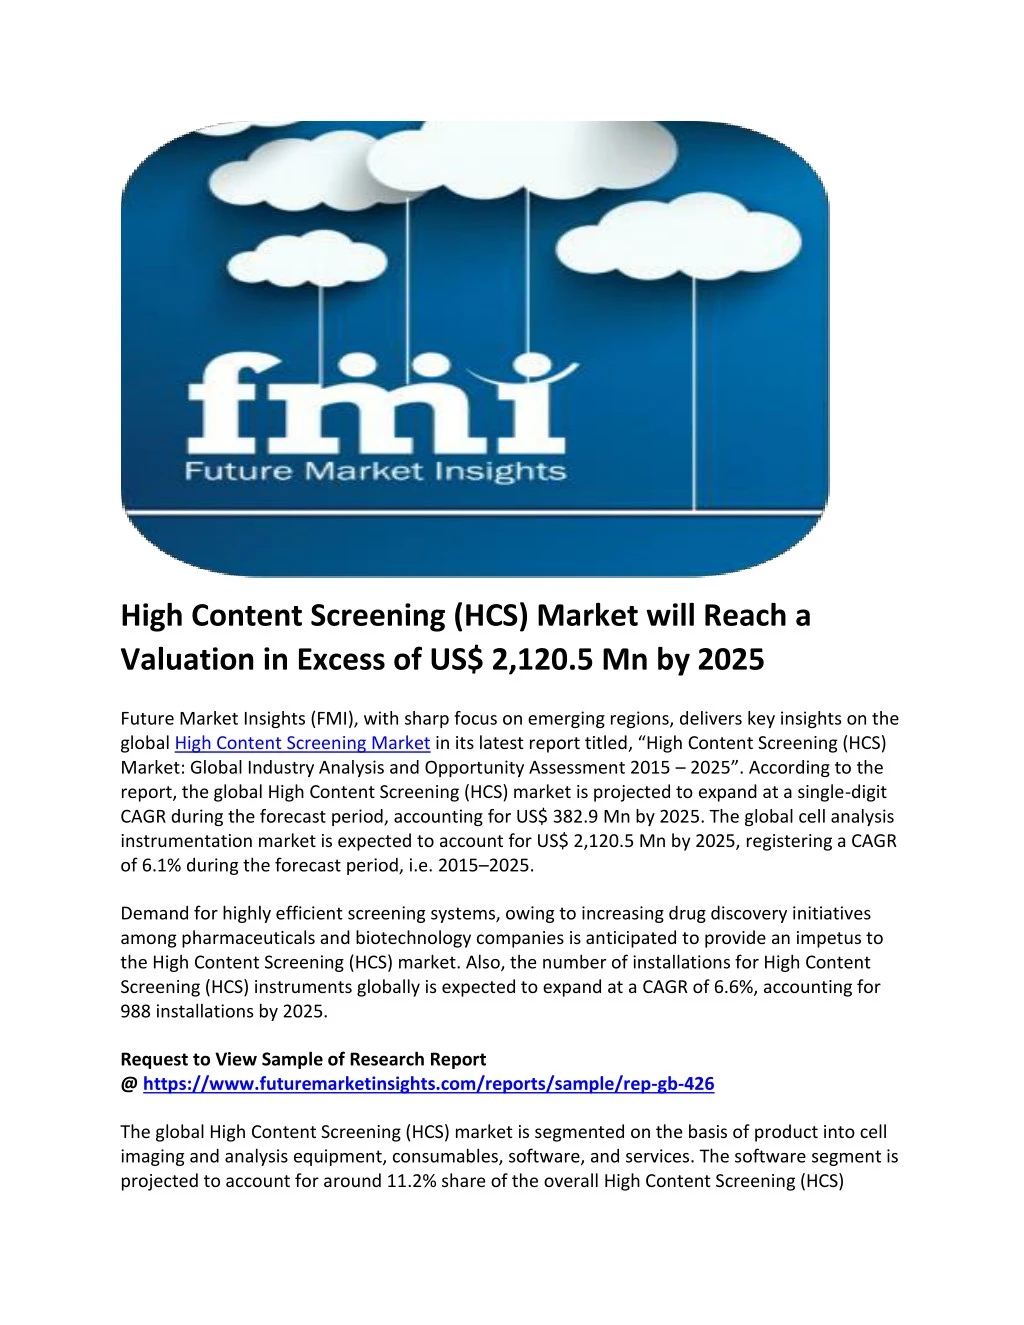 high content screening hcs market will reach